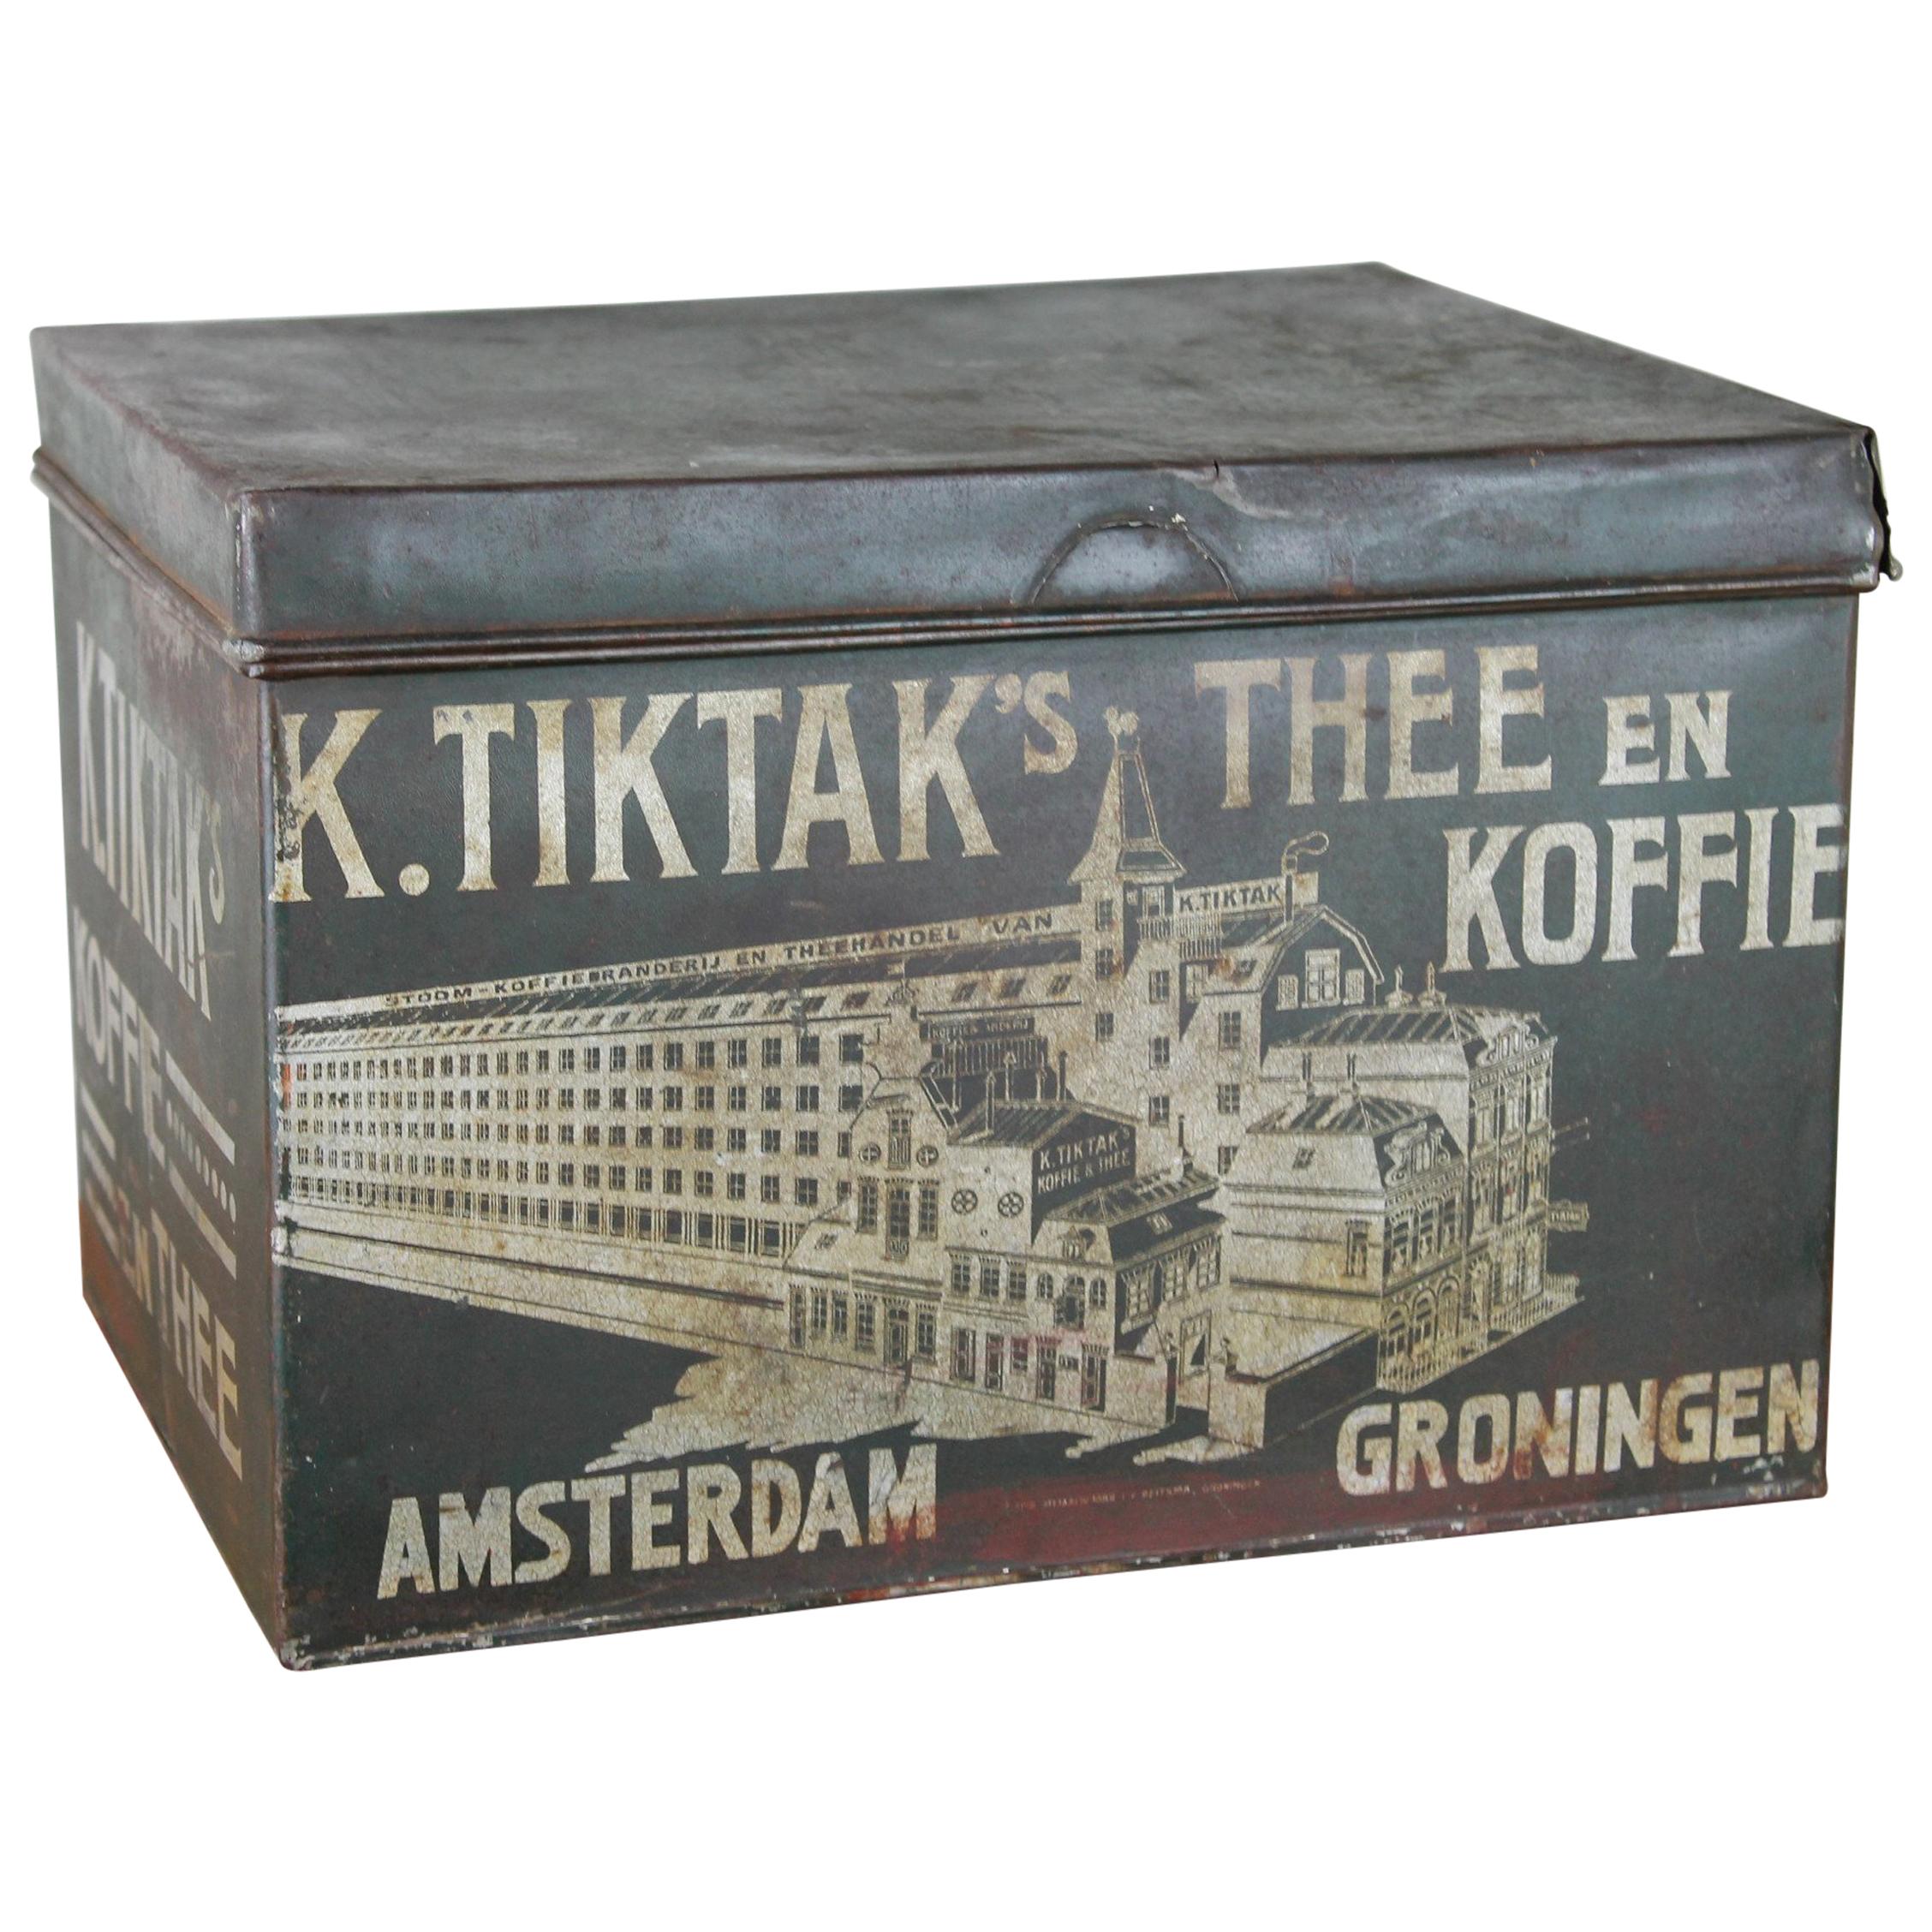 Antique Coffee and Tea Tin K. Tiktak's Amsterdam Groningen, Early 20th Century